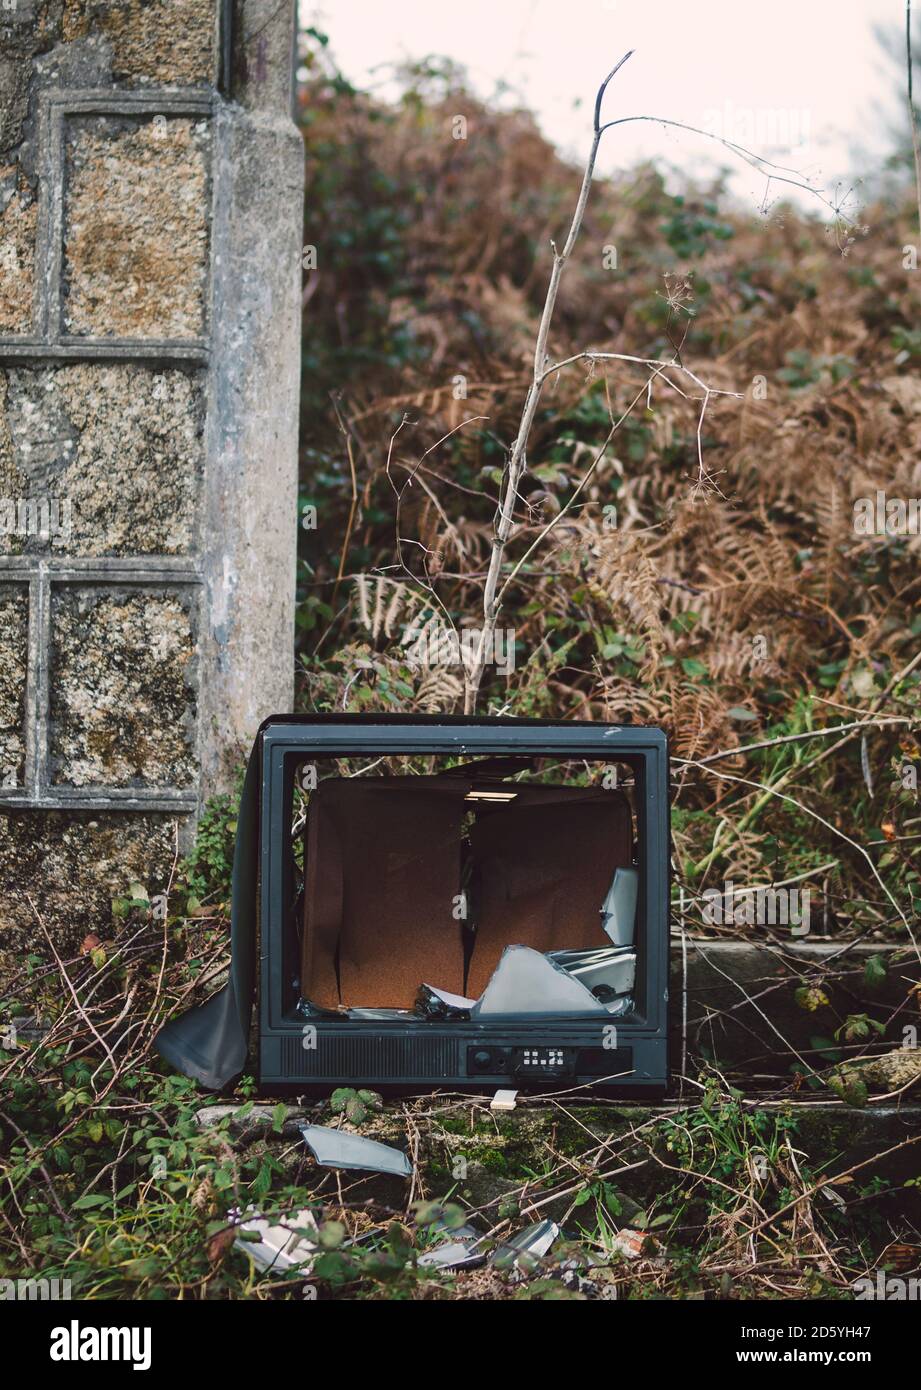 Spain, Galicia, Ferrol, broken Tv in a ruinous place Stock Photo